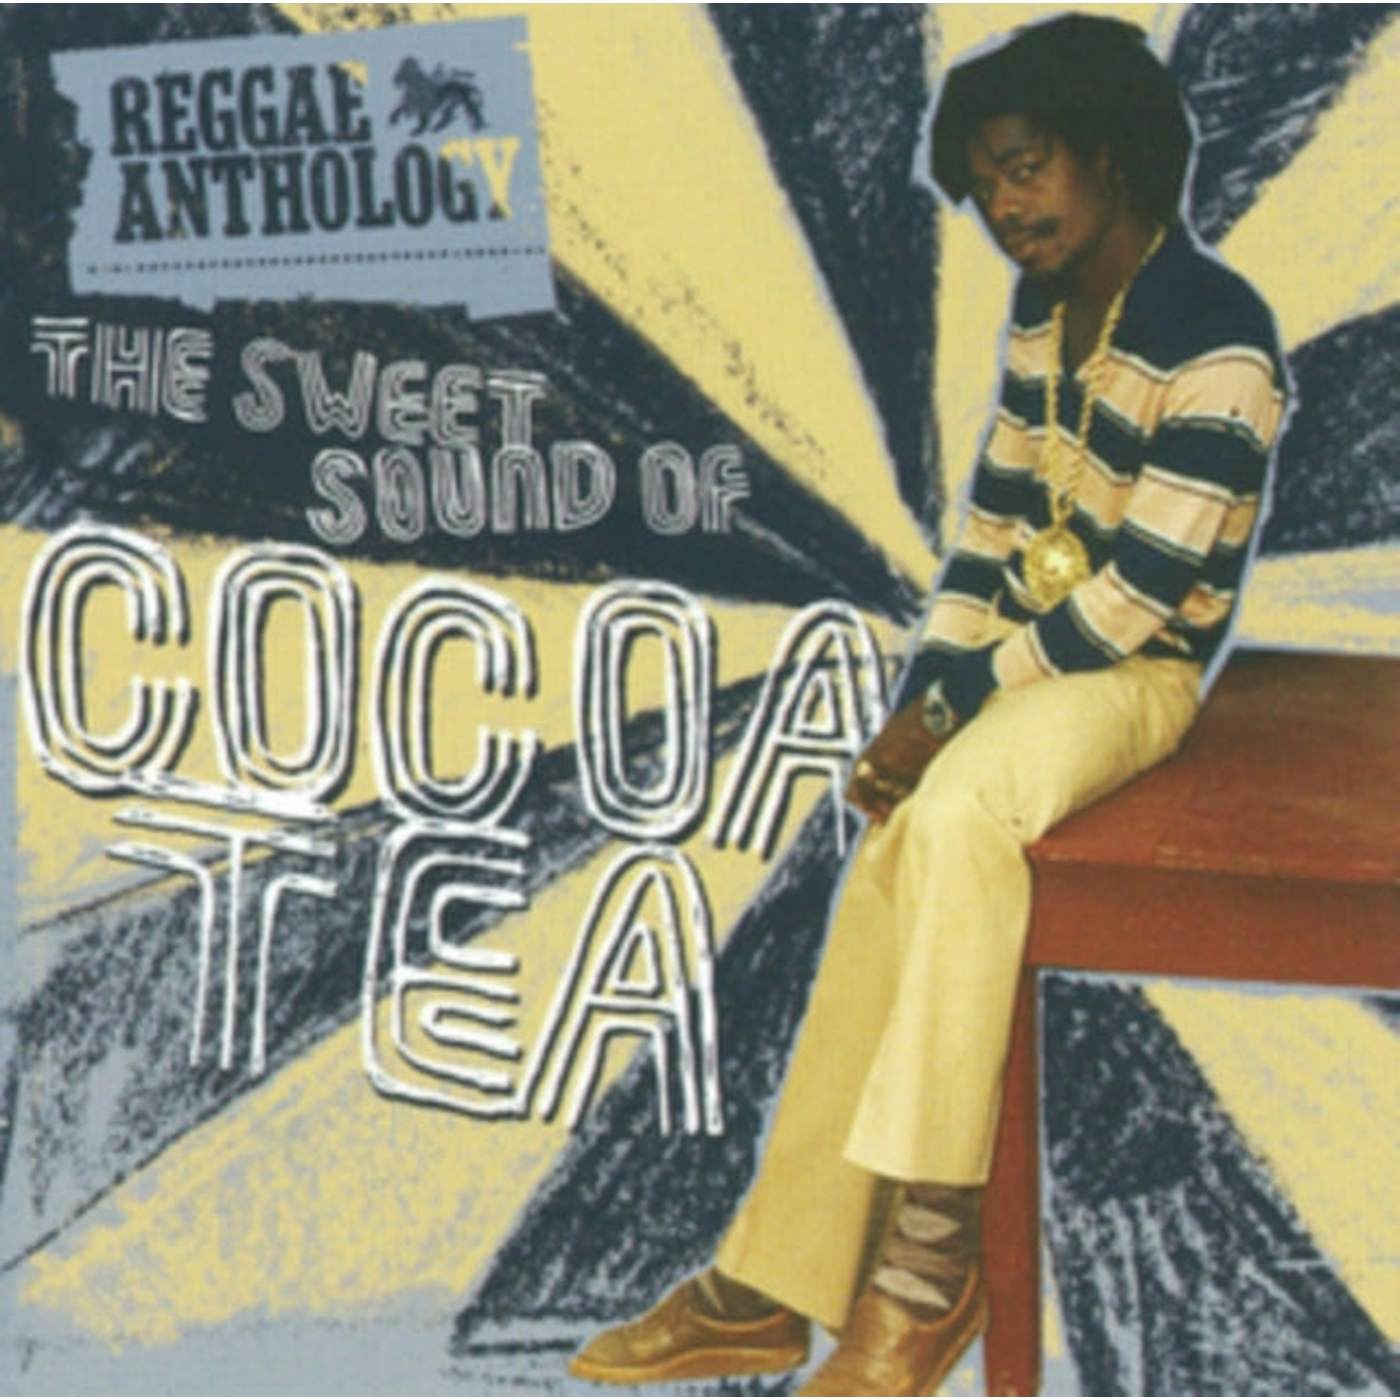 Cocoa Tea LP - The Sweet Sound Of Cocoa Tea (Vinyl)